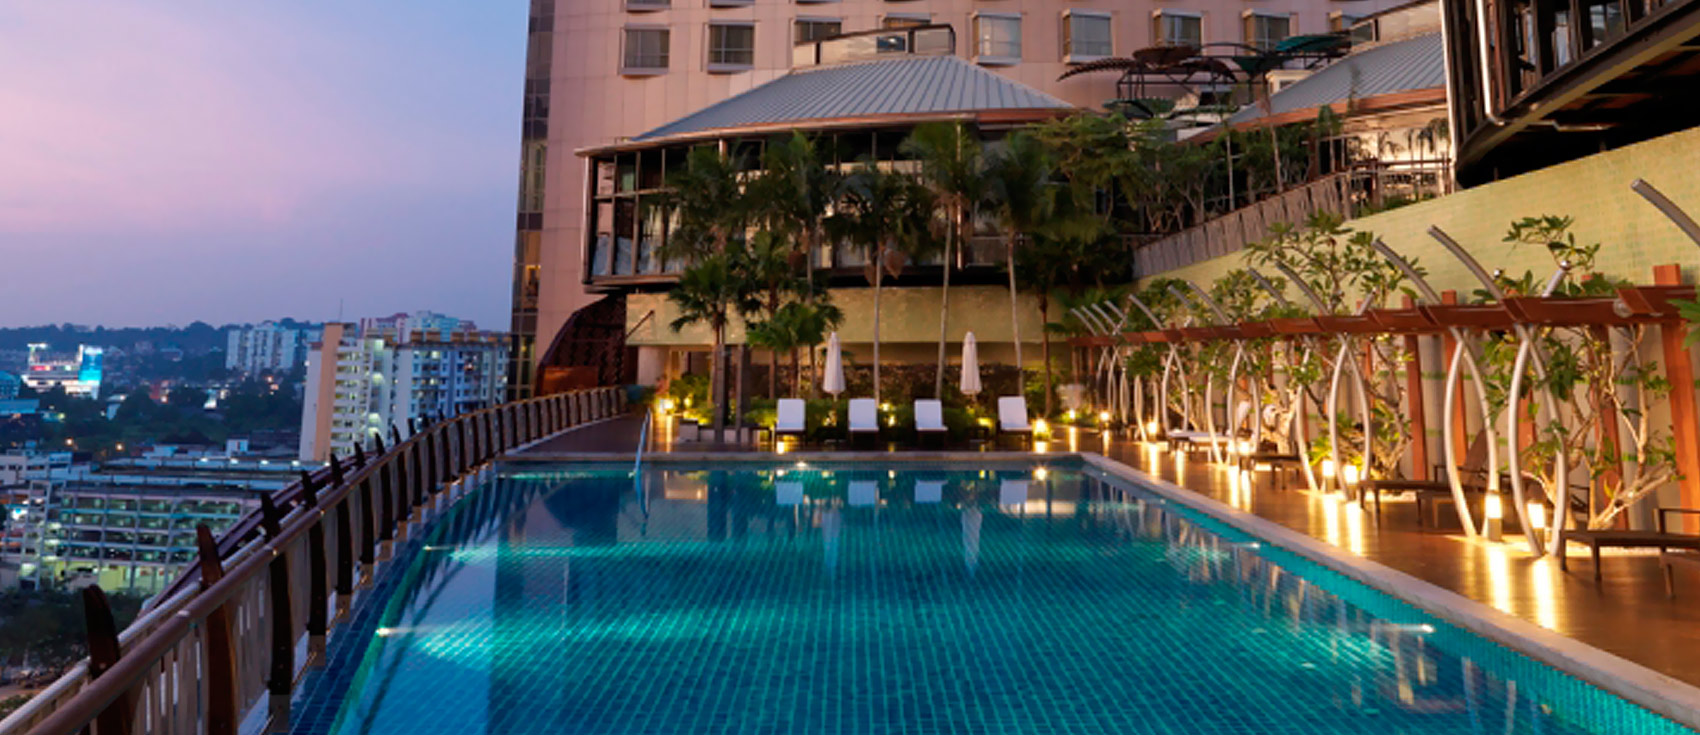 تور مالزي هتل گاردن اند رزیدنس- آژانس مسافرتي و هواپيمايي آفتاب ساحل آبي